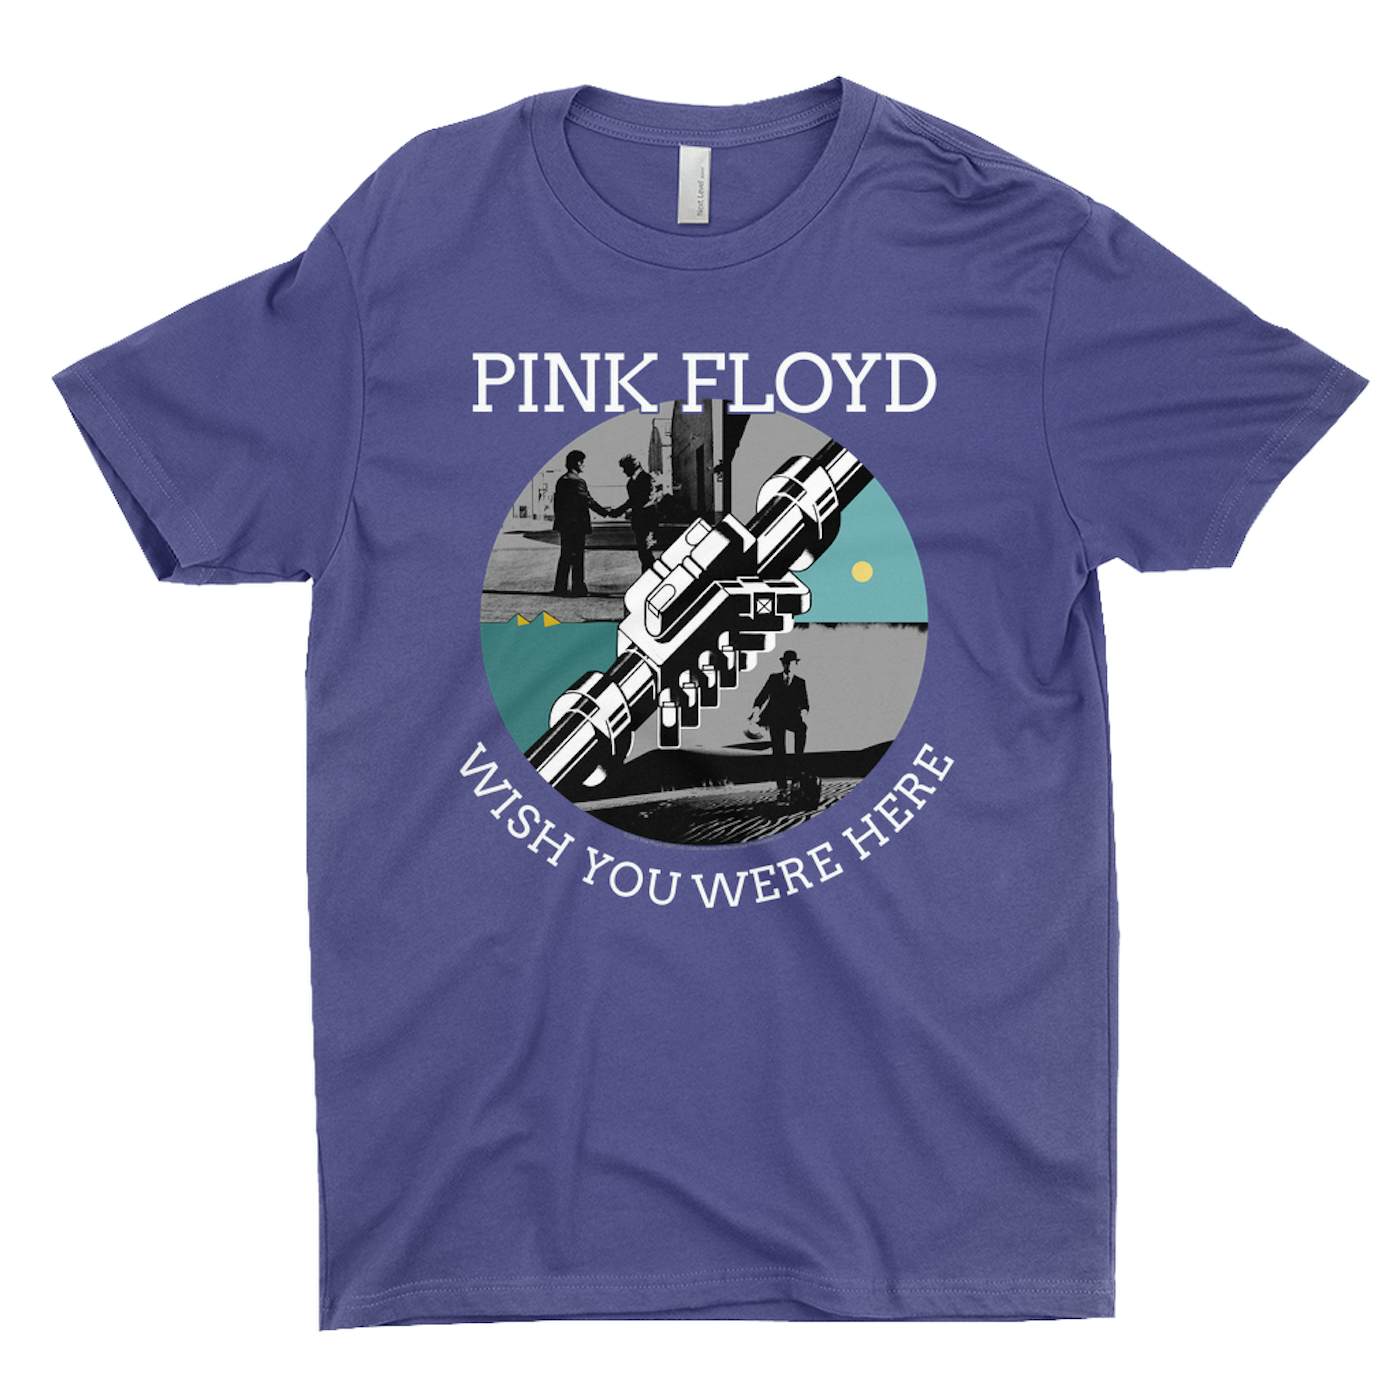 Pink Floyd T-Shirt | Wish You Were Here Album Collage Pink Floyd Shirt